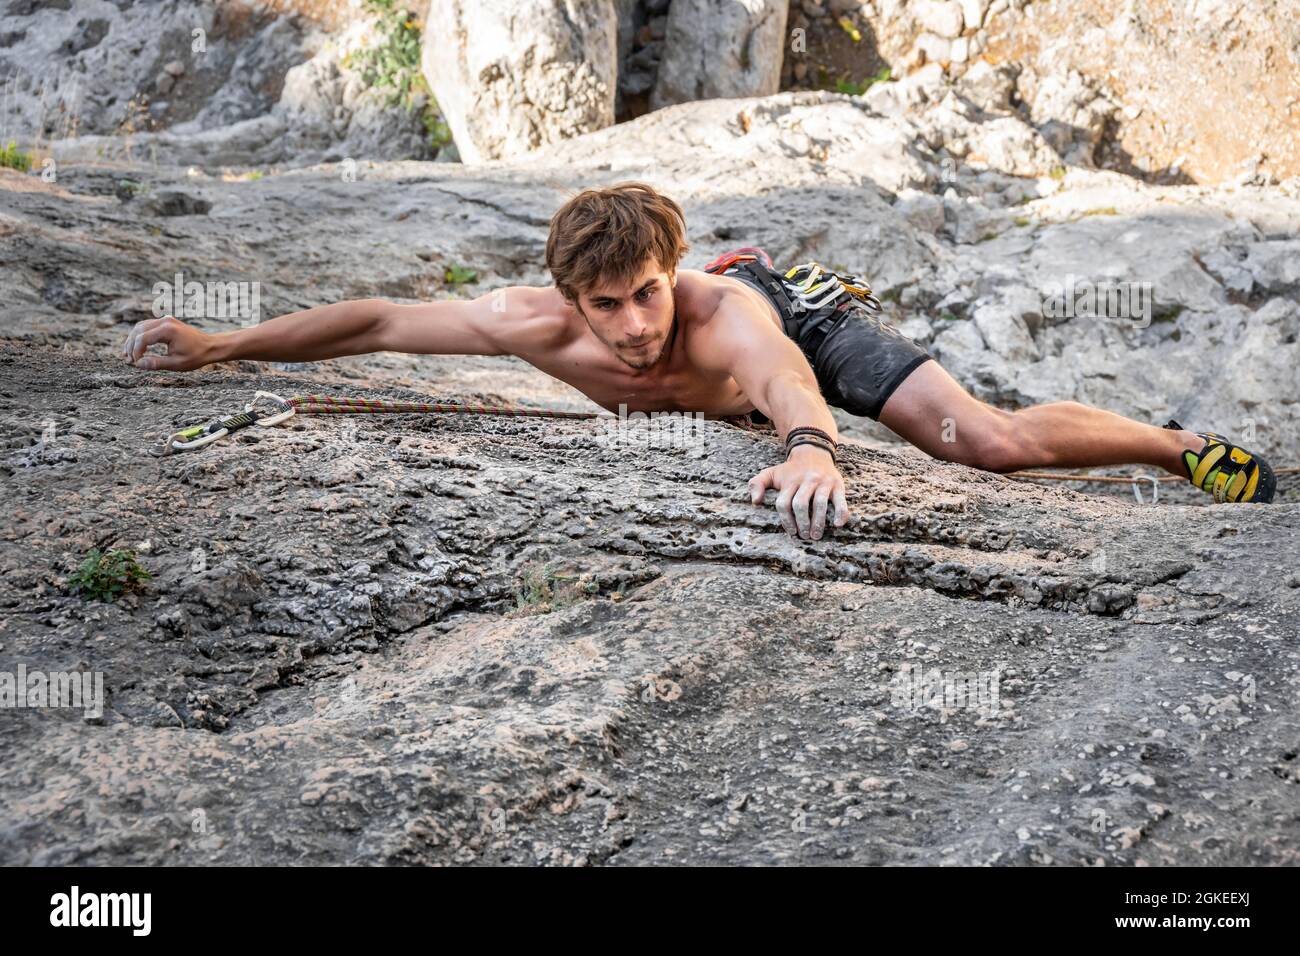 Young man climbing on a rock face, lead climber, sport climbing, Kalymnos, Dodecanese, Greece Stock Photo